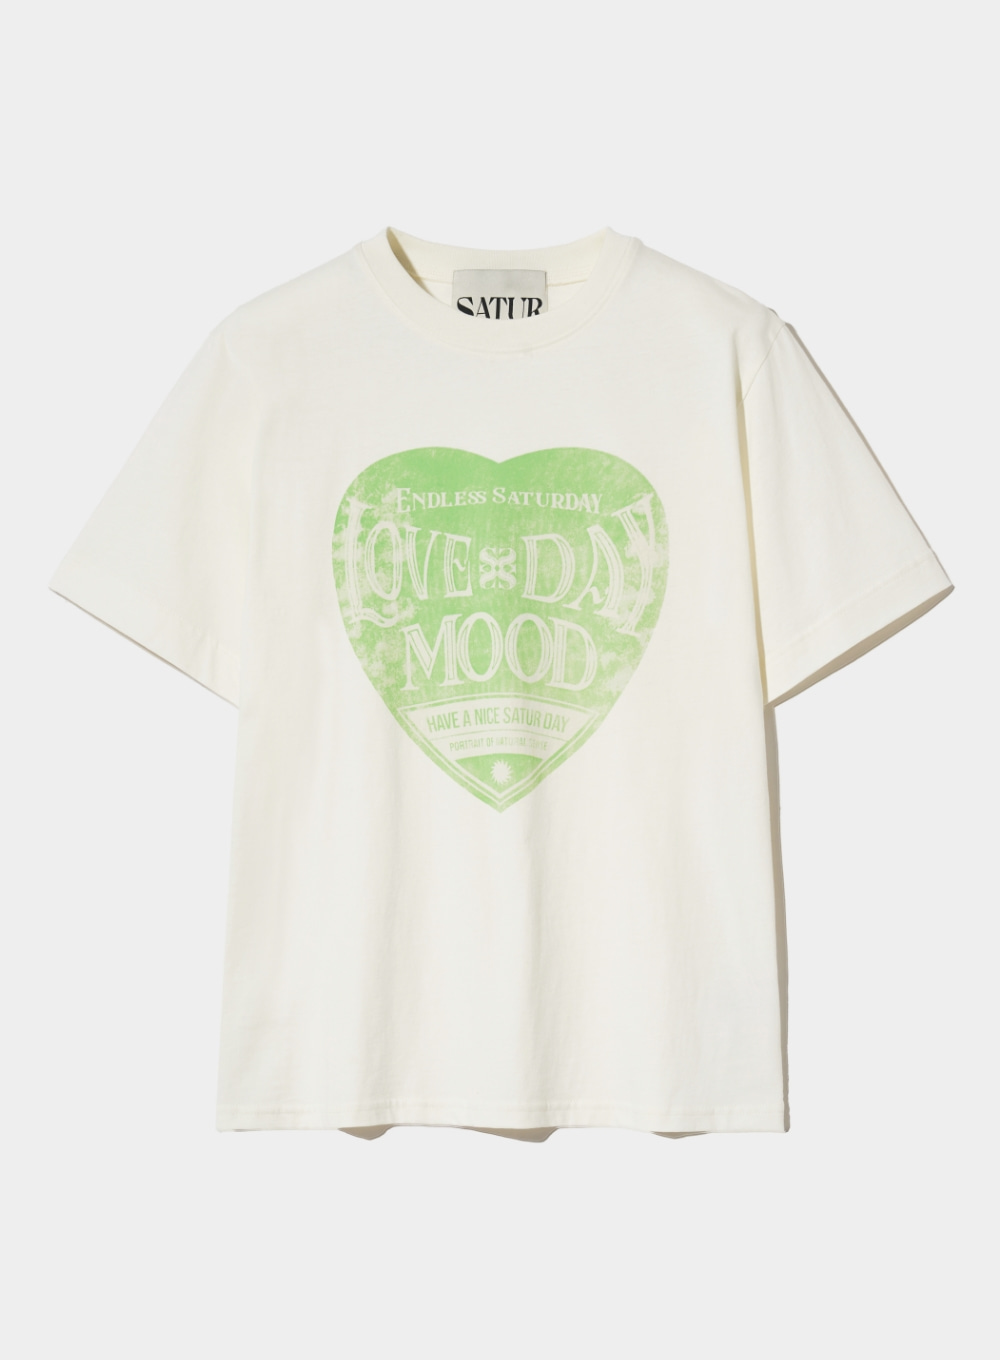 Saturday Retro Mood Graphic T-Shirts - Cream Green